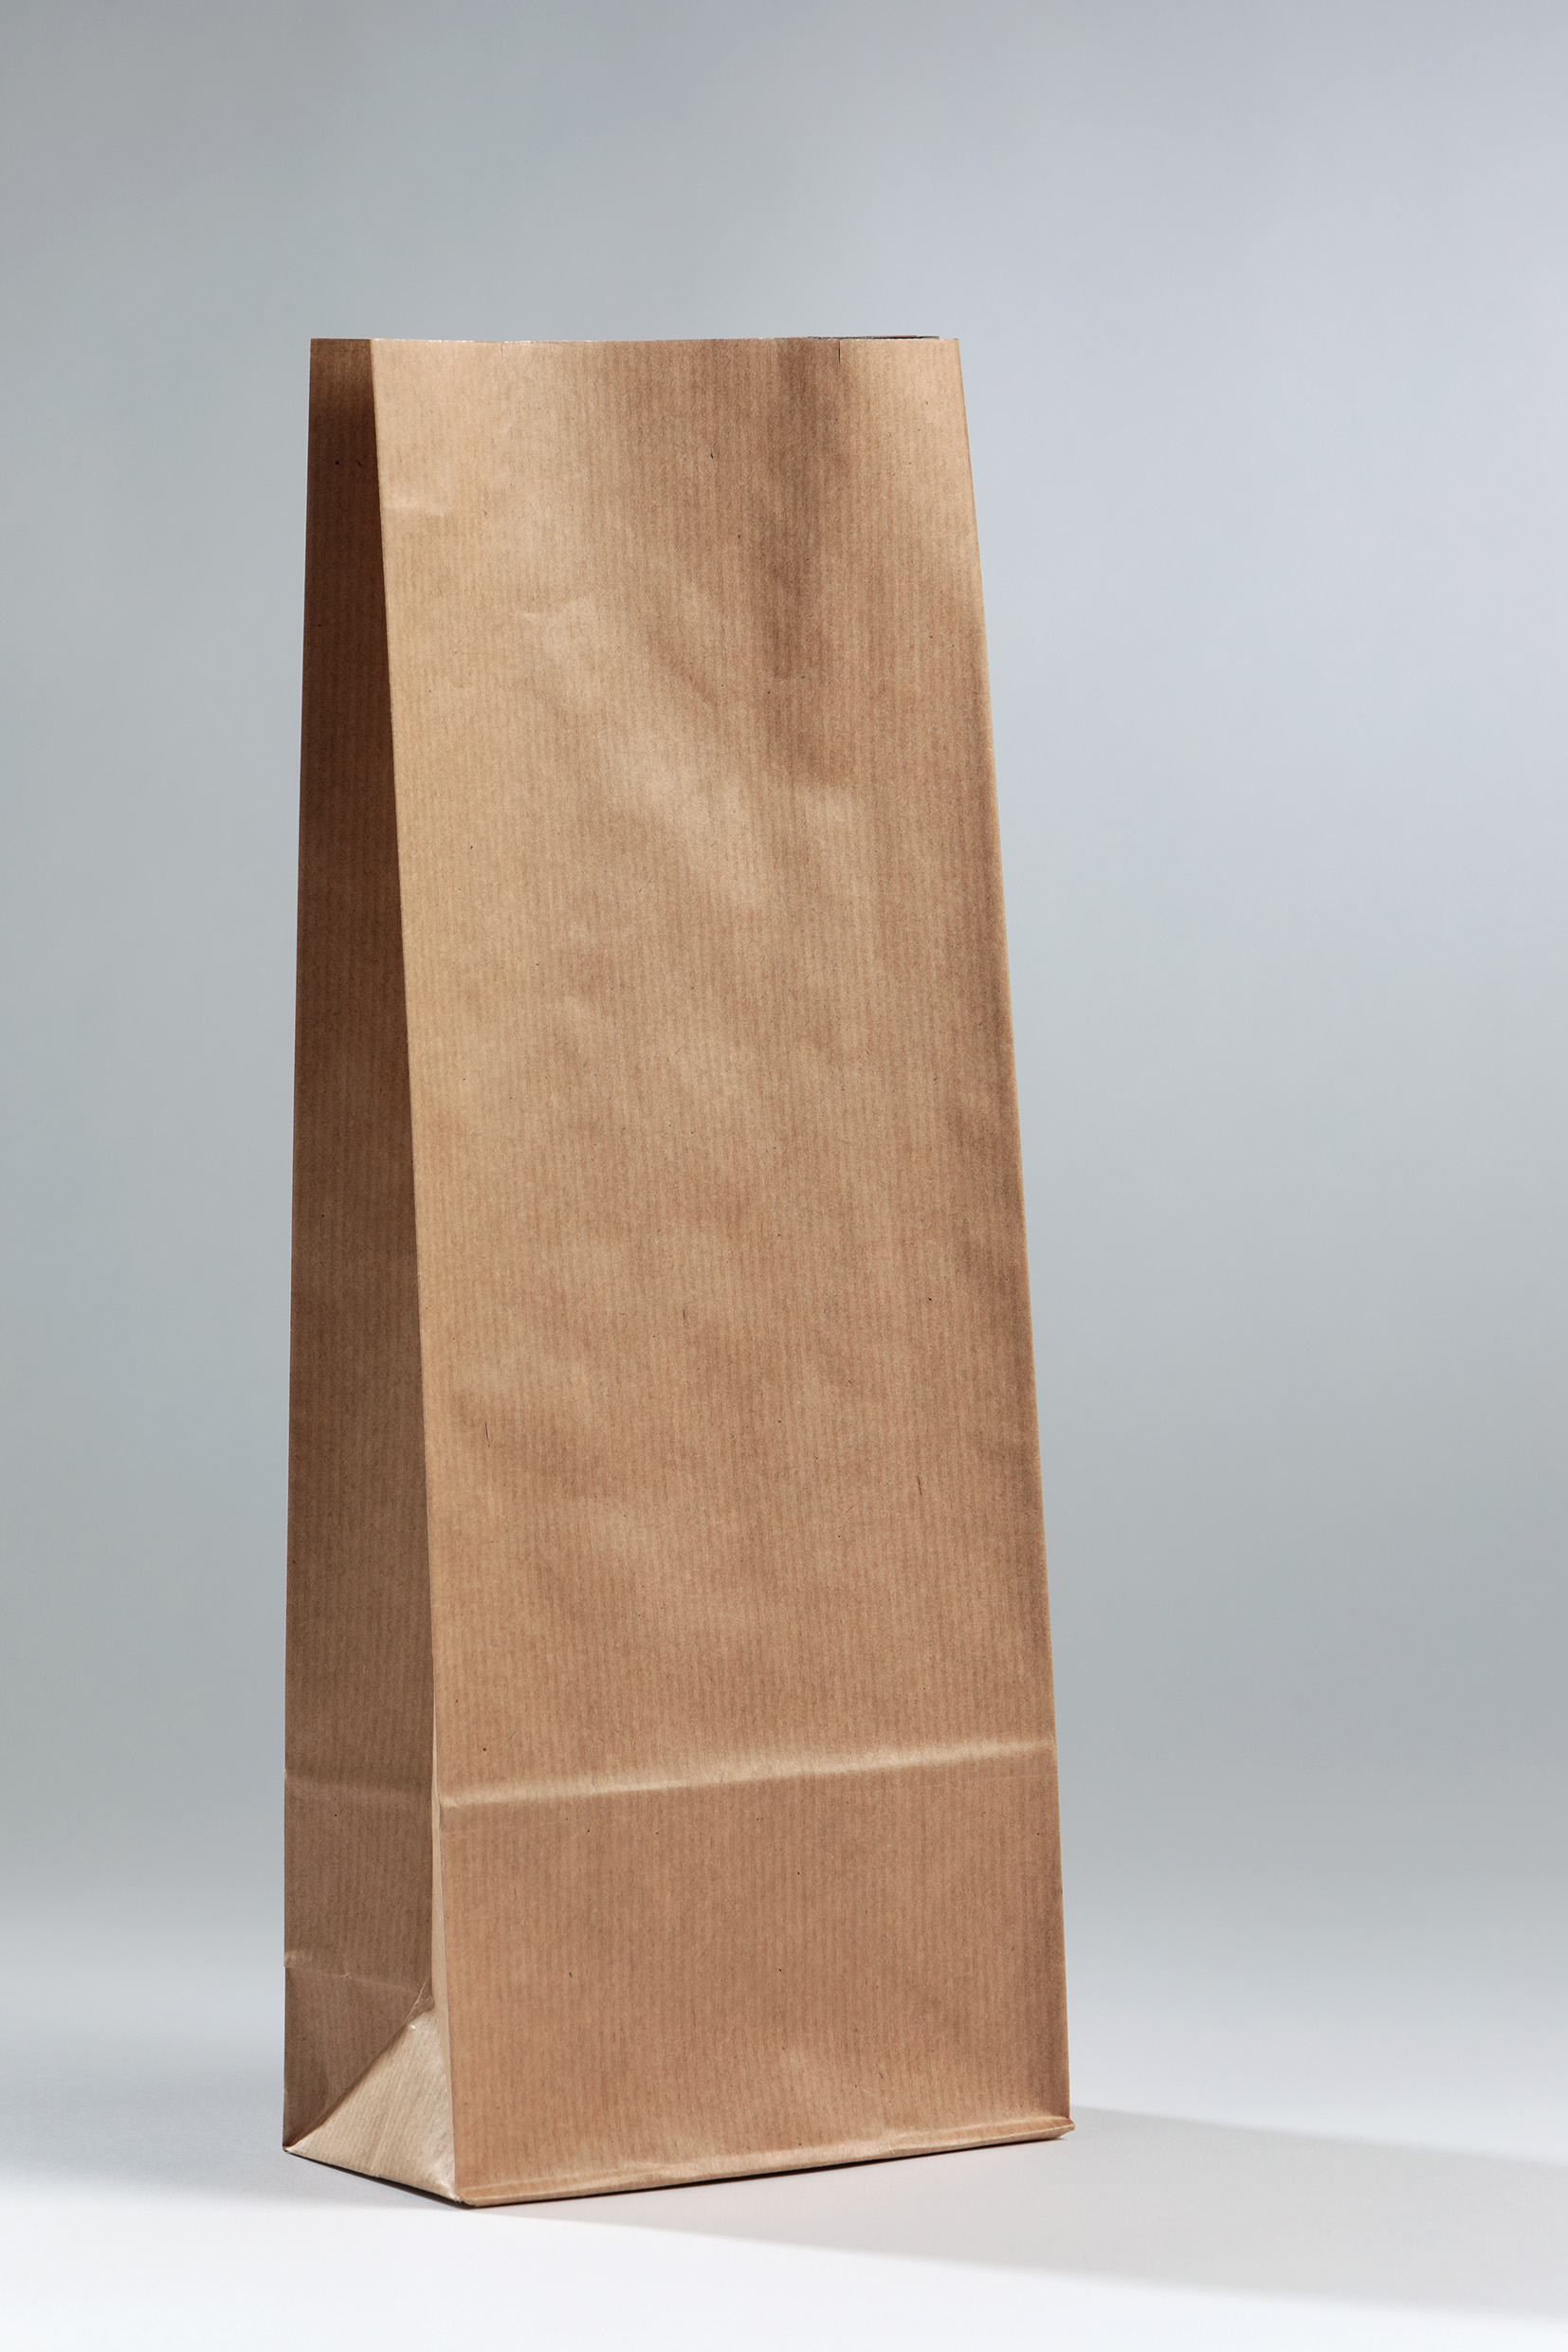 Paper Bag Itanagar, Paper Bag in Itanagar, Best quality Paper Bag in  Itanagar, Cheap Paper Bag Itanagar, Premium Paper Bag Itanagar | ICG